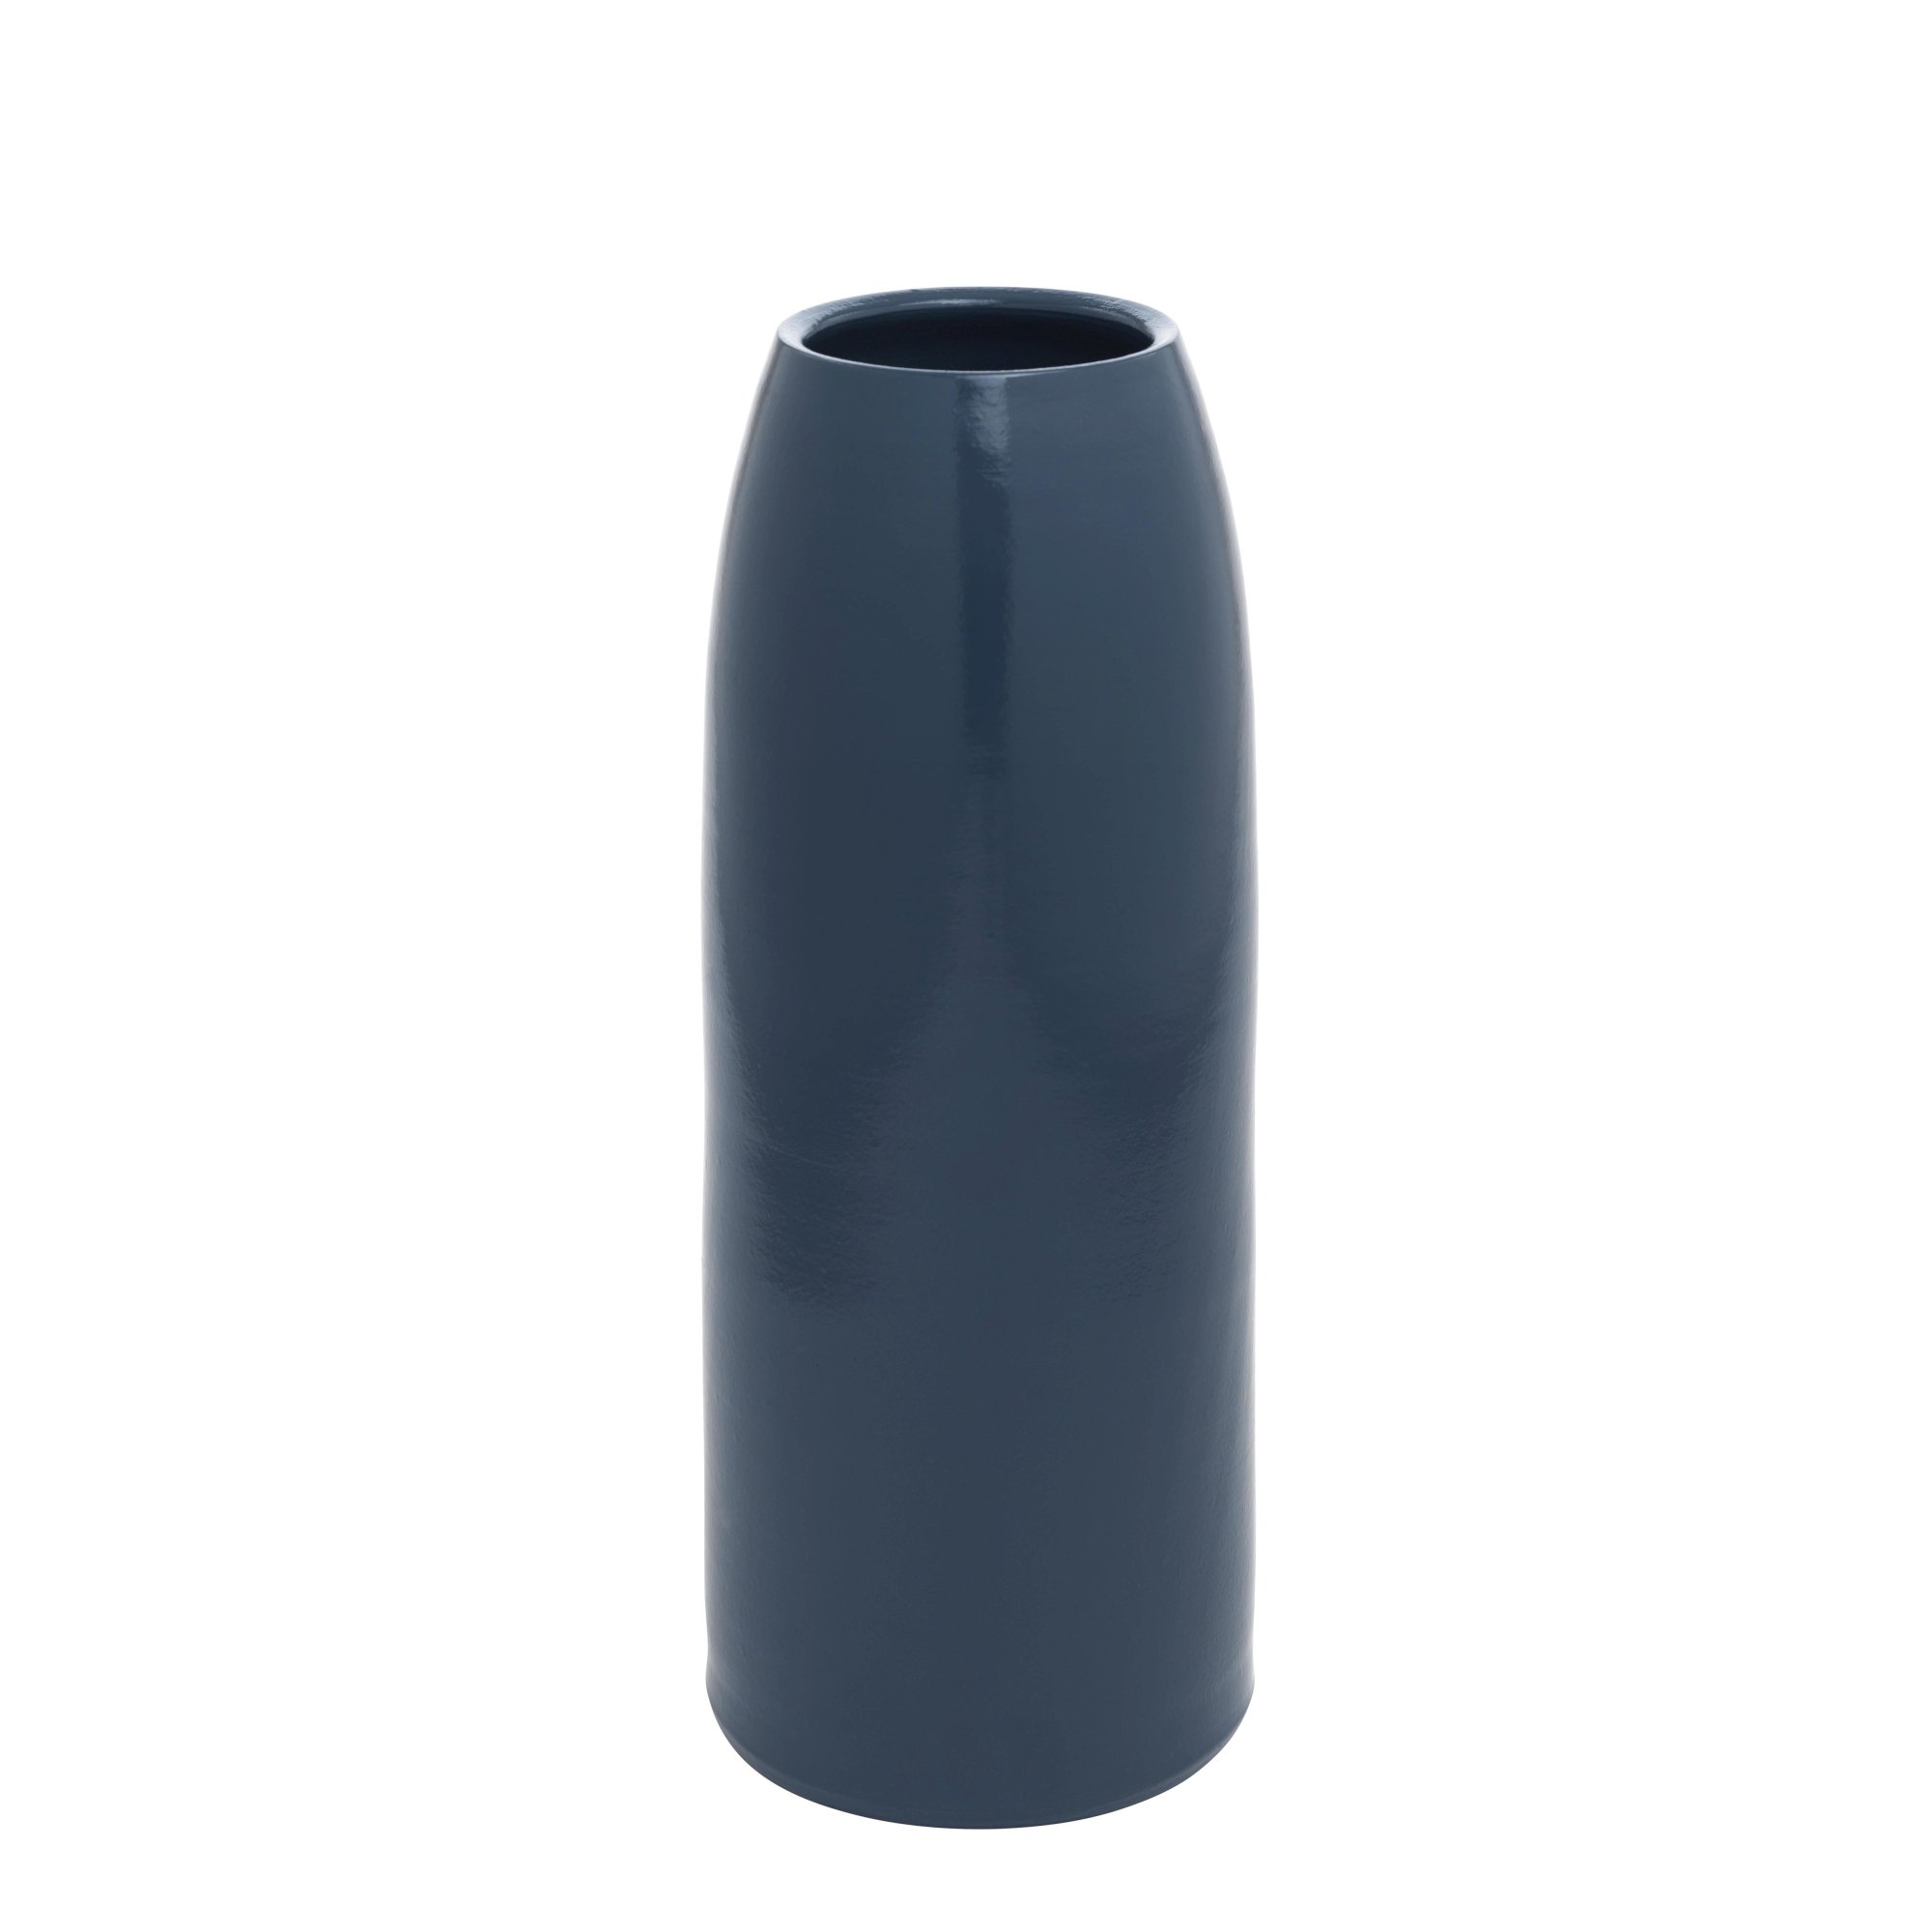 CARLA Vase groß, stahlblau